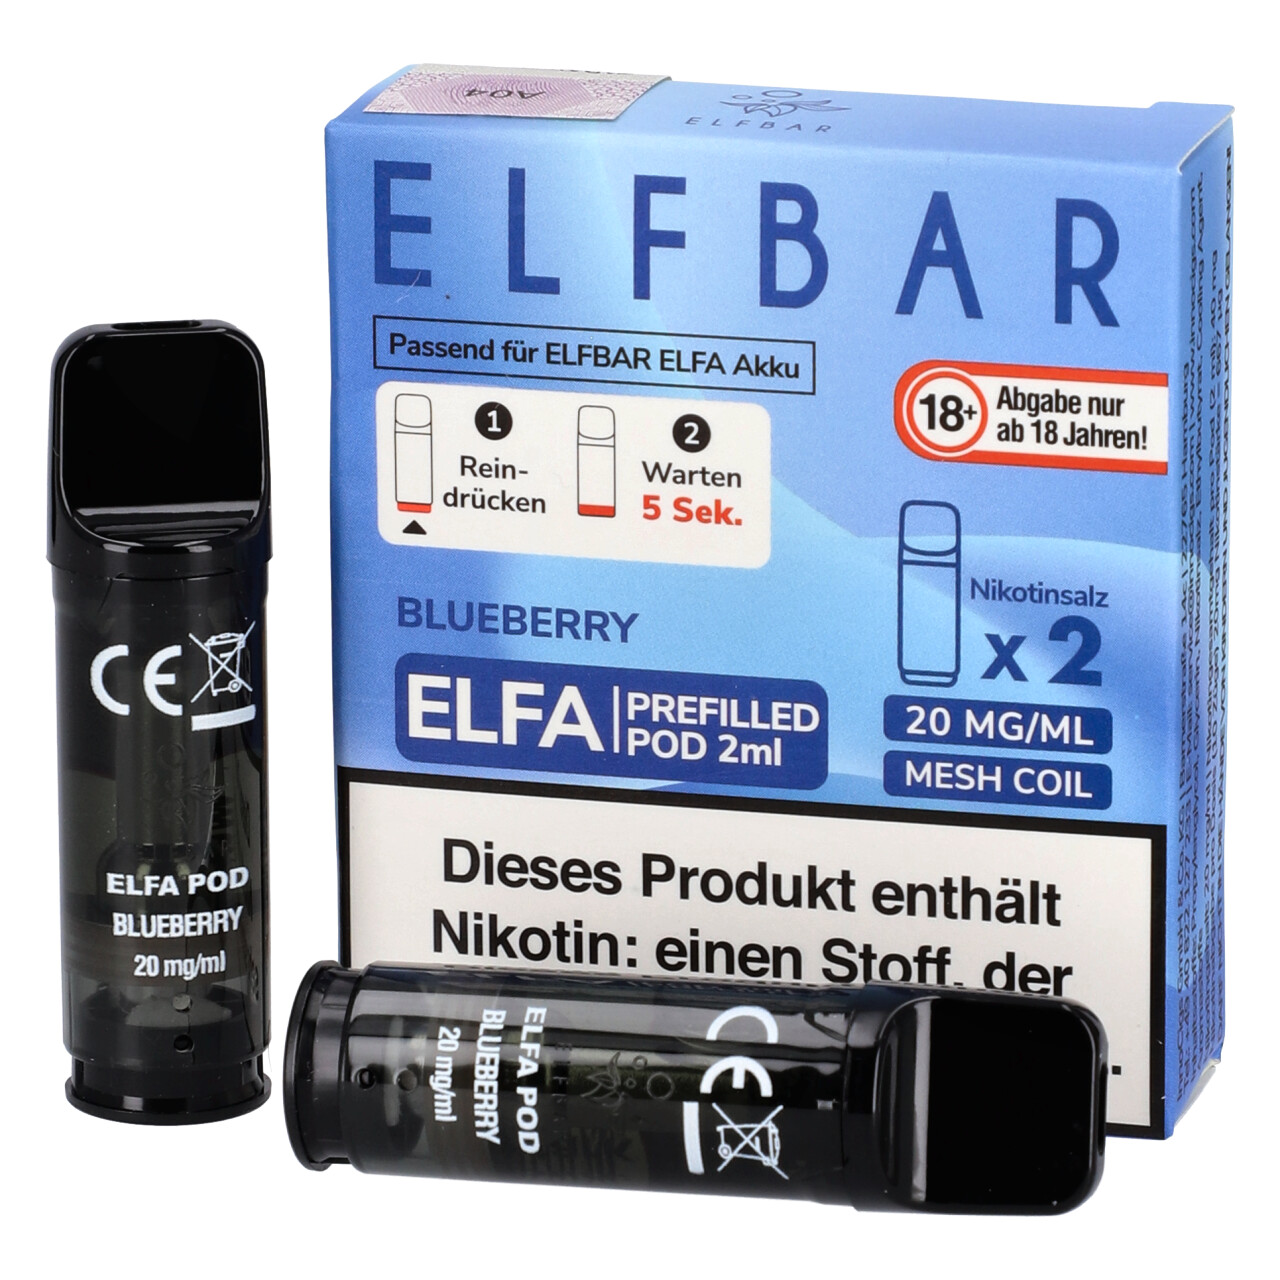 Elf Bar ELFA Pod Blaubeere (Blueberry), 2ml Liquid, 2-er Pack